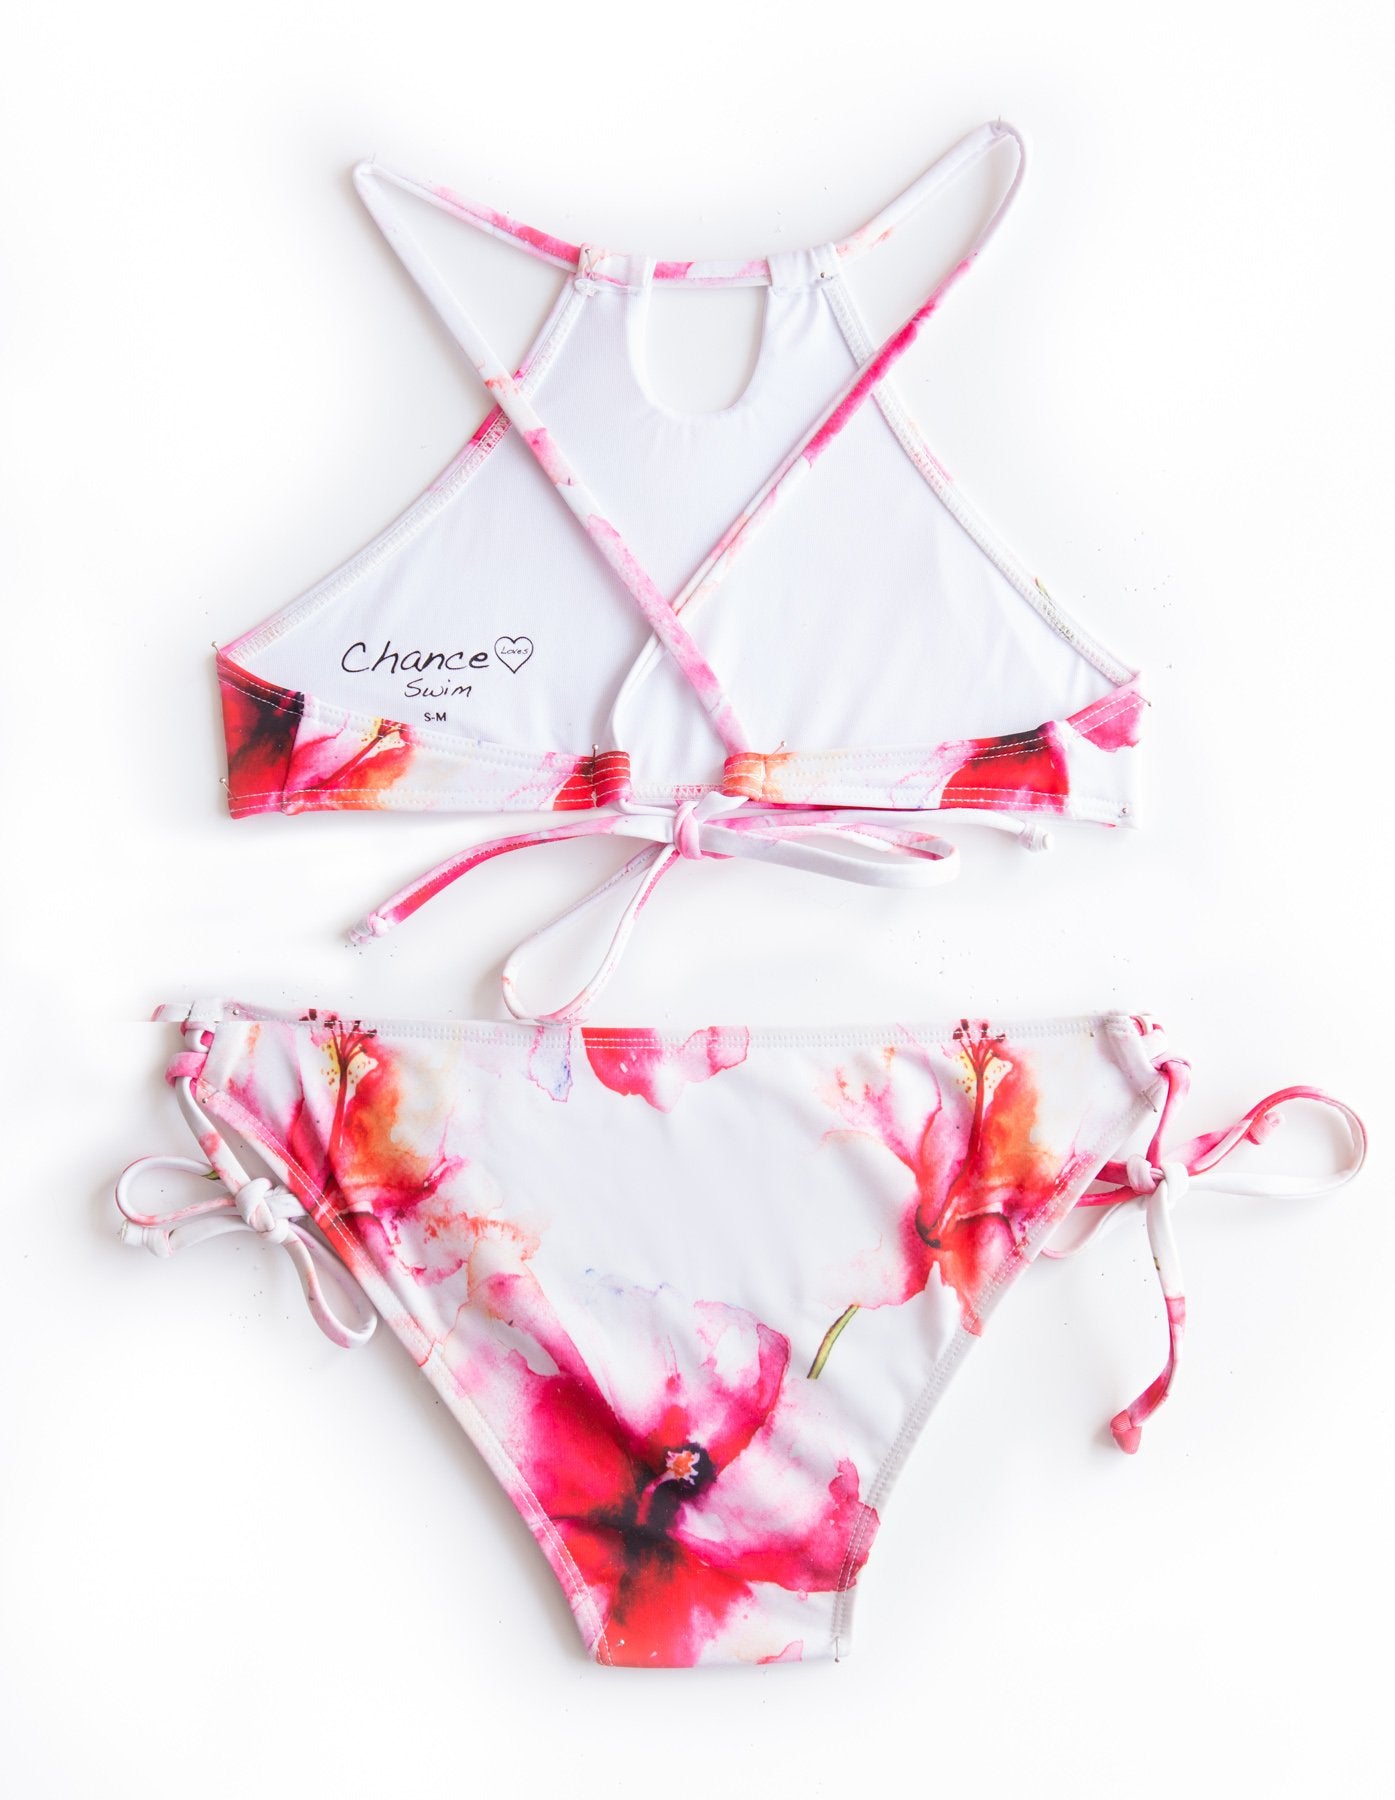 Costa Flora Girls Tankini - Chance Loves Swimwear